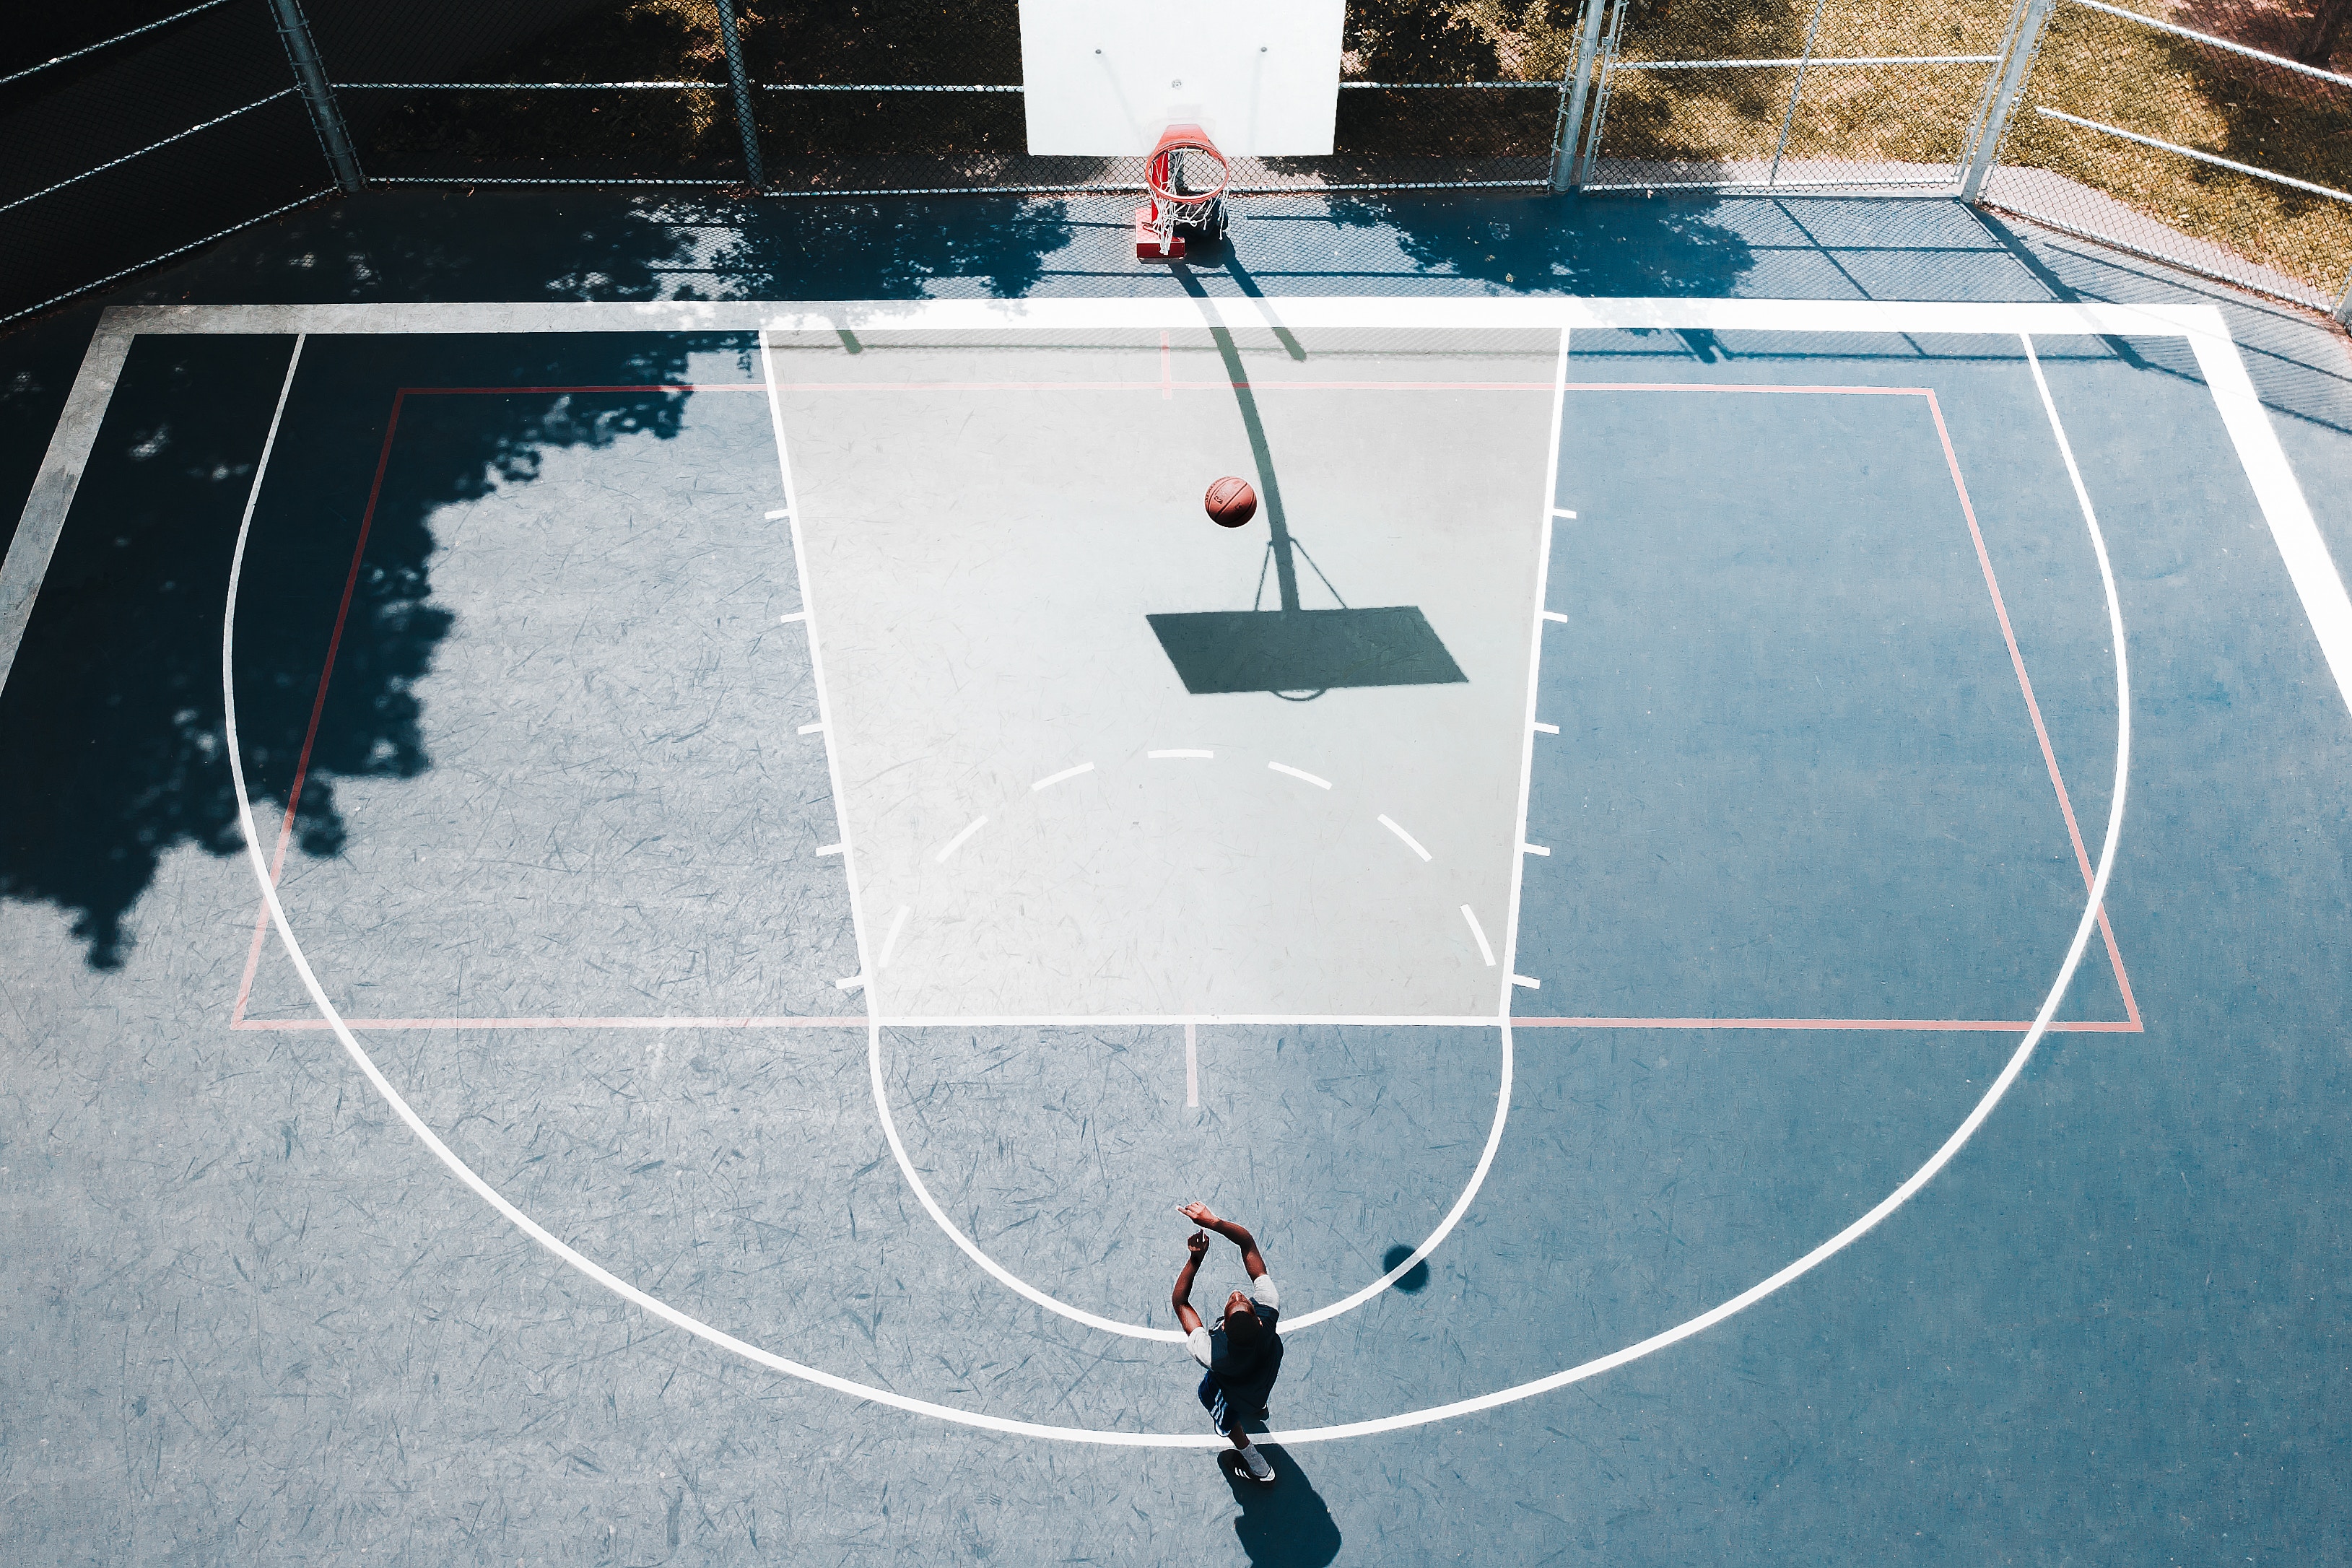 person shooting on basketball court